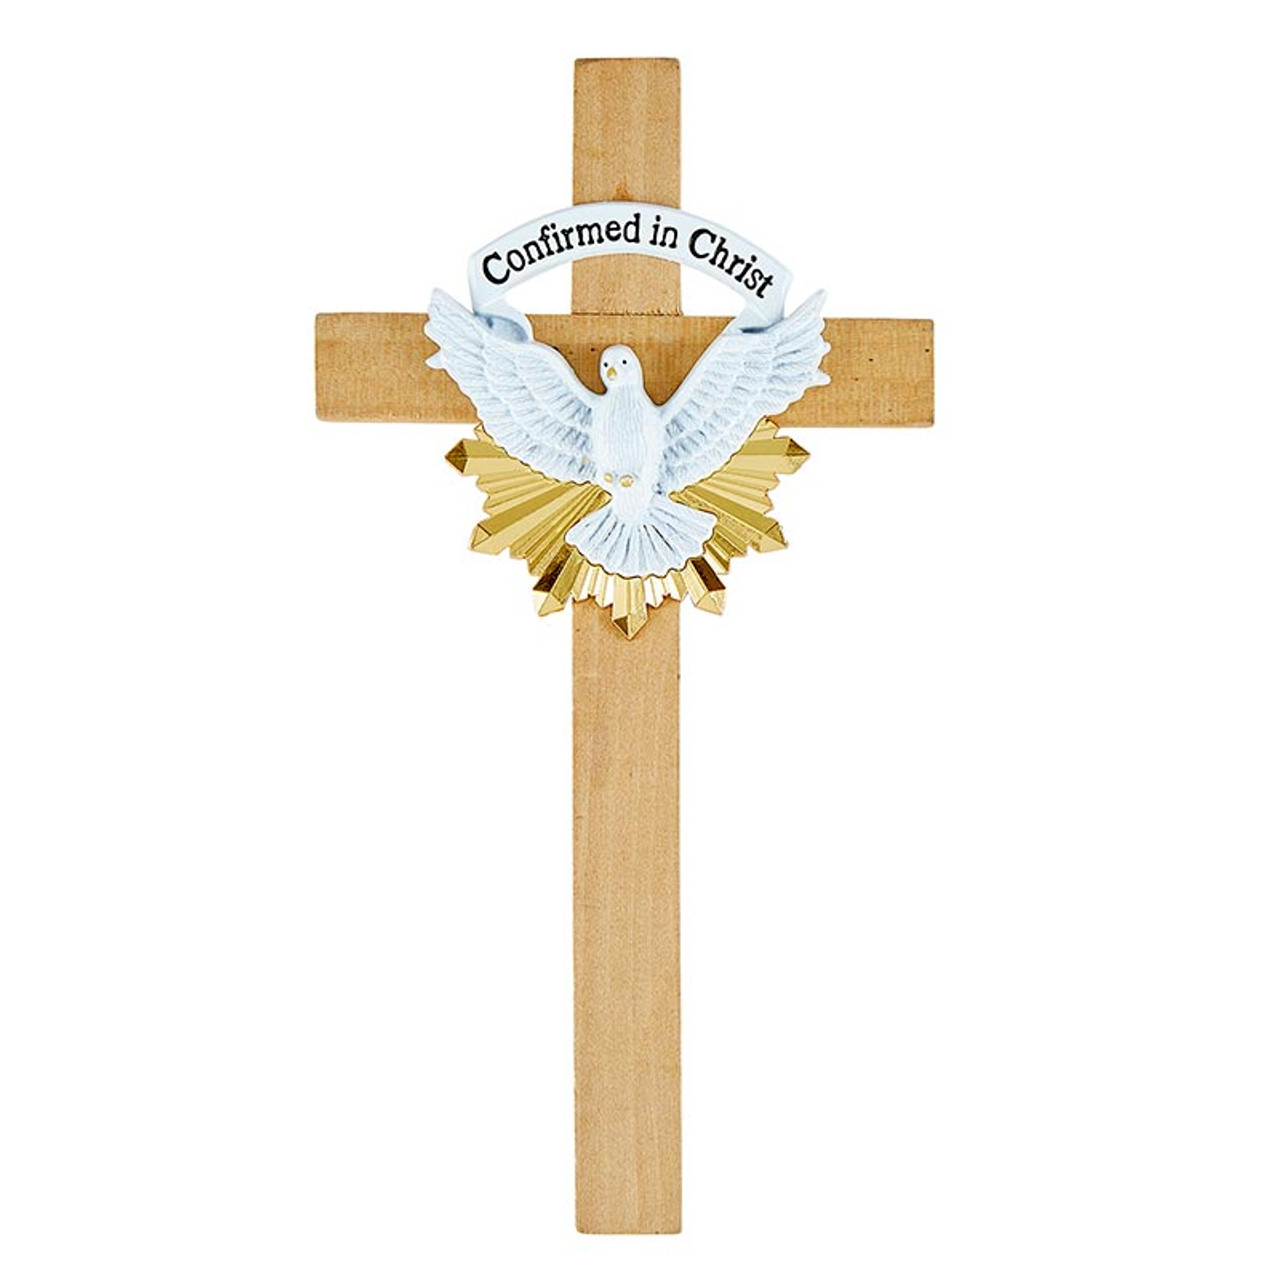 Hanging Wooden Cross for church, chapel, school. Catholic, Christian